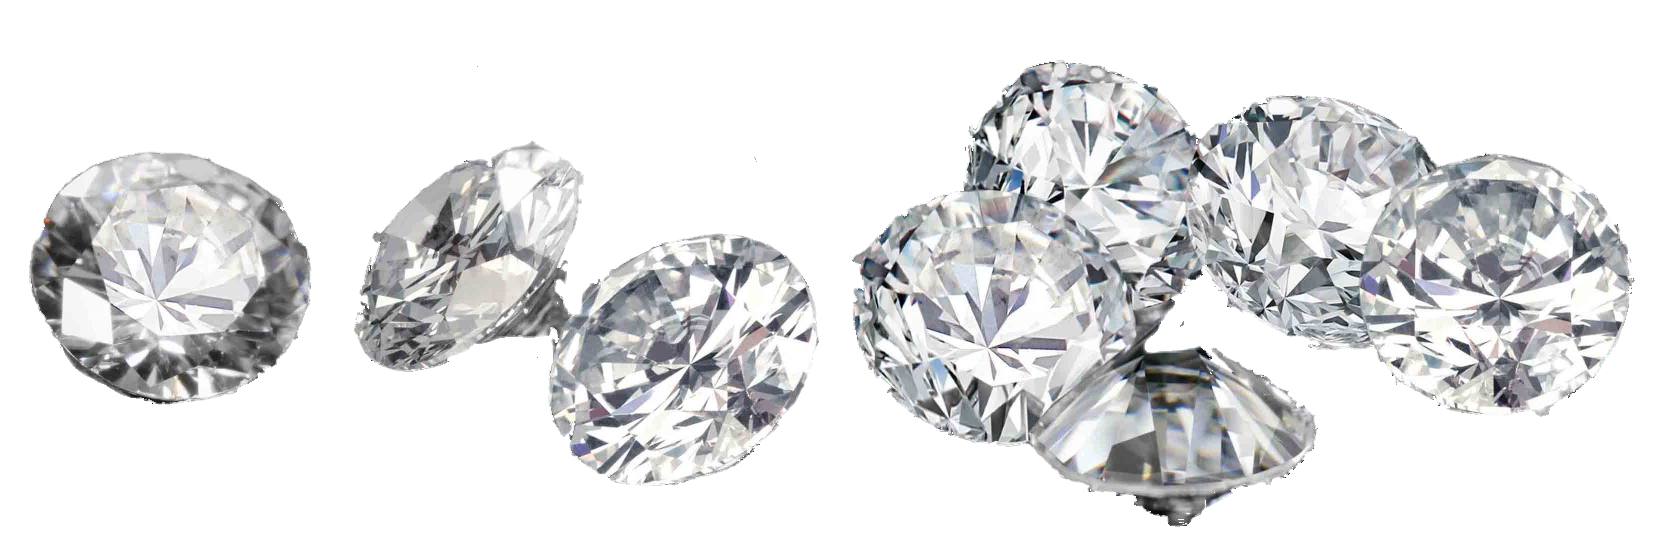 Ring Diamond Computer Diamonds Icons Free HD Image Clipart